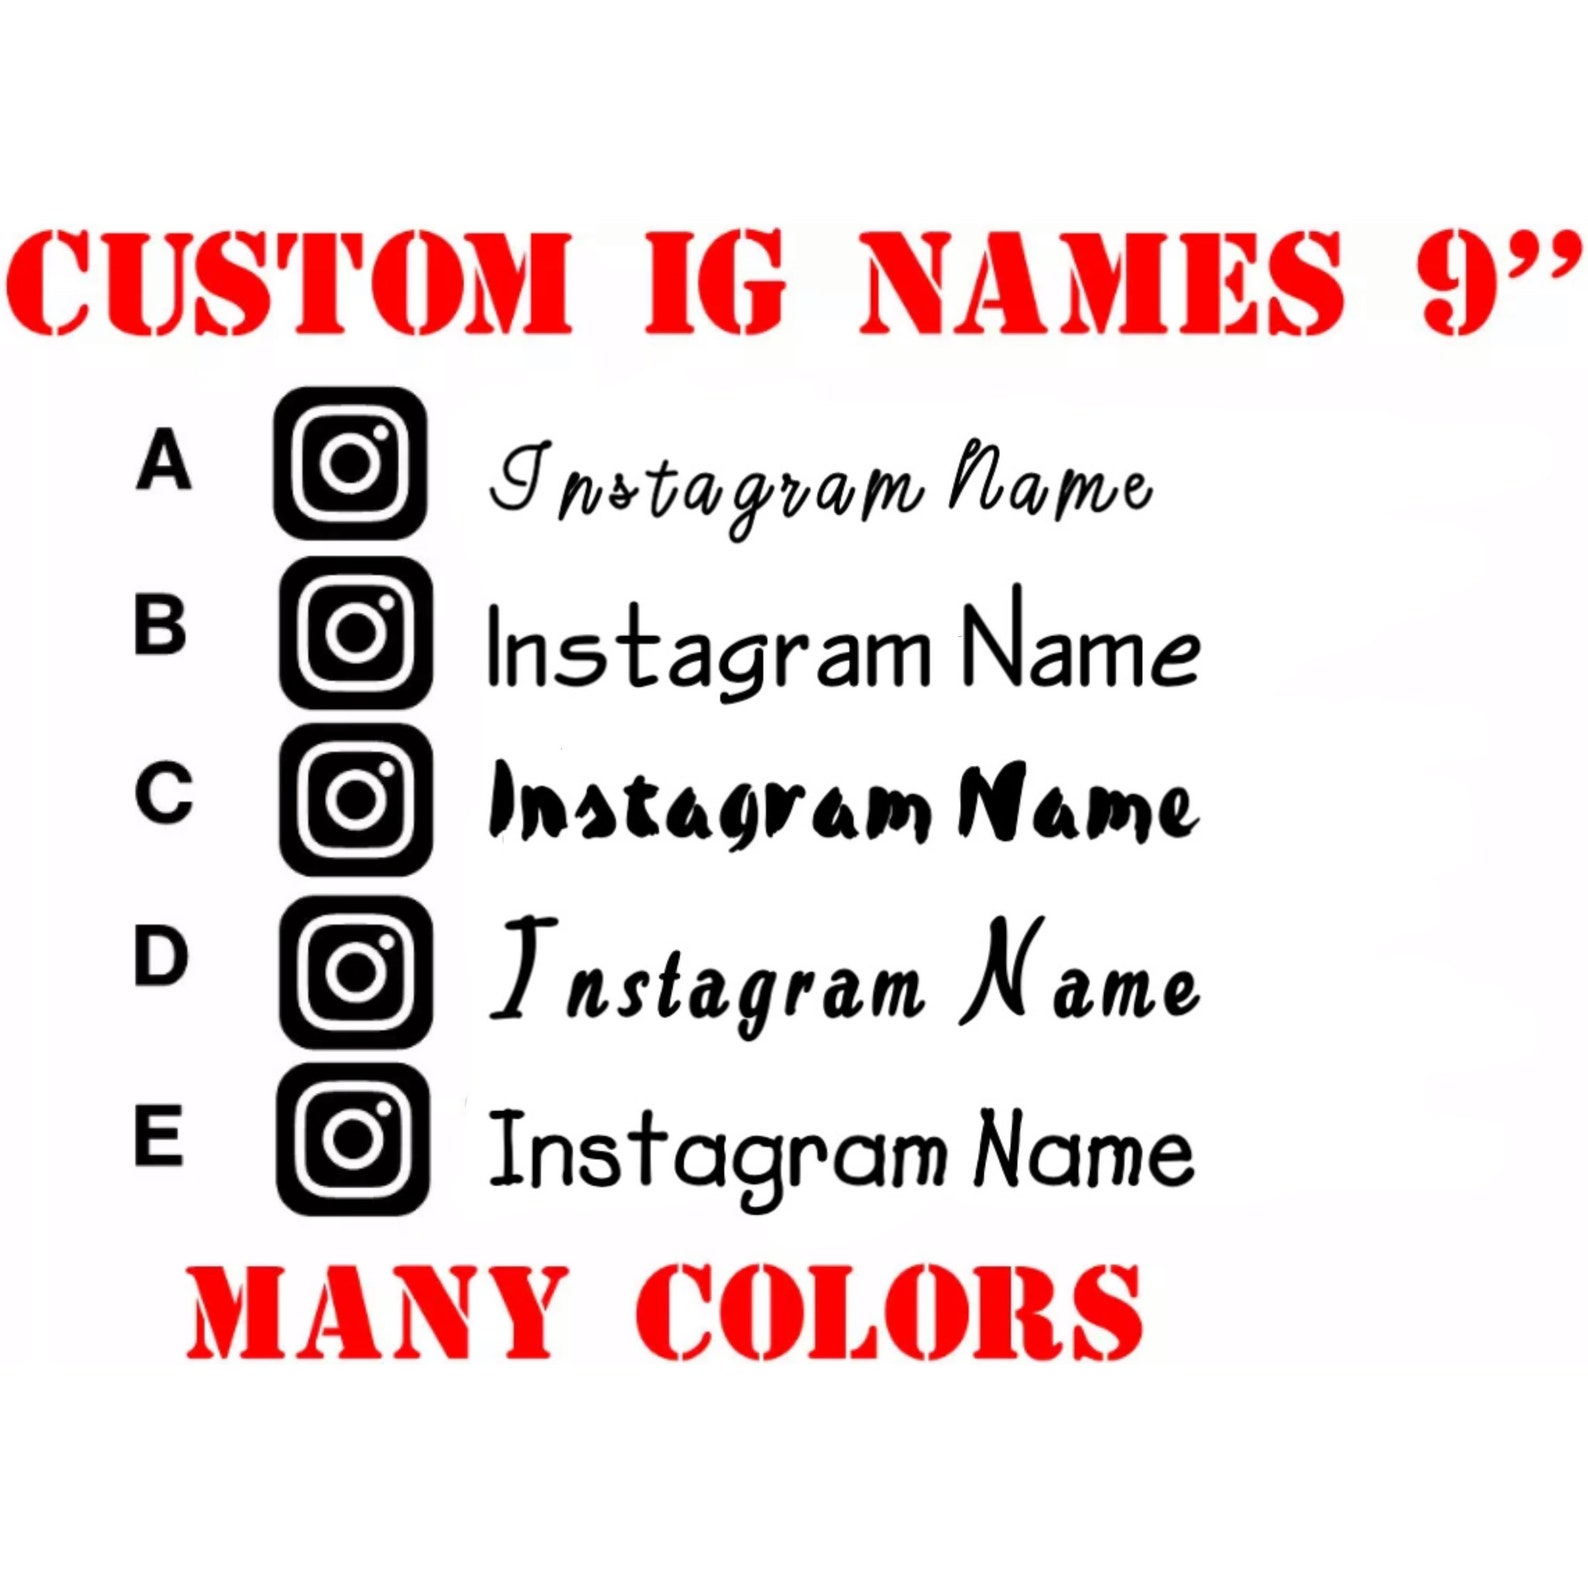 Instagram custom ig name Vinyl Decal Sticker Window Decal | Etsy